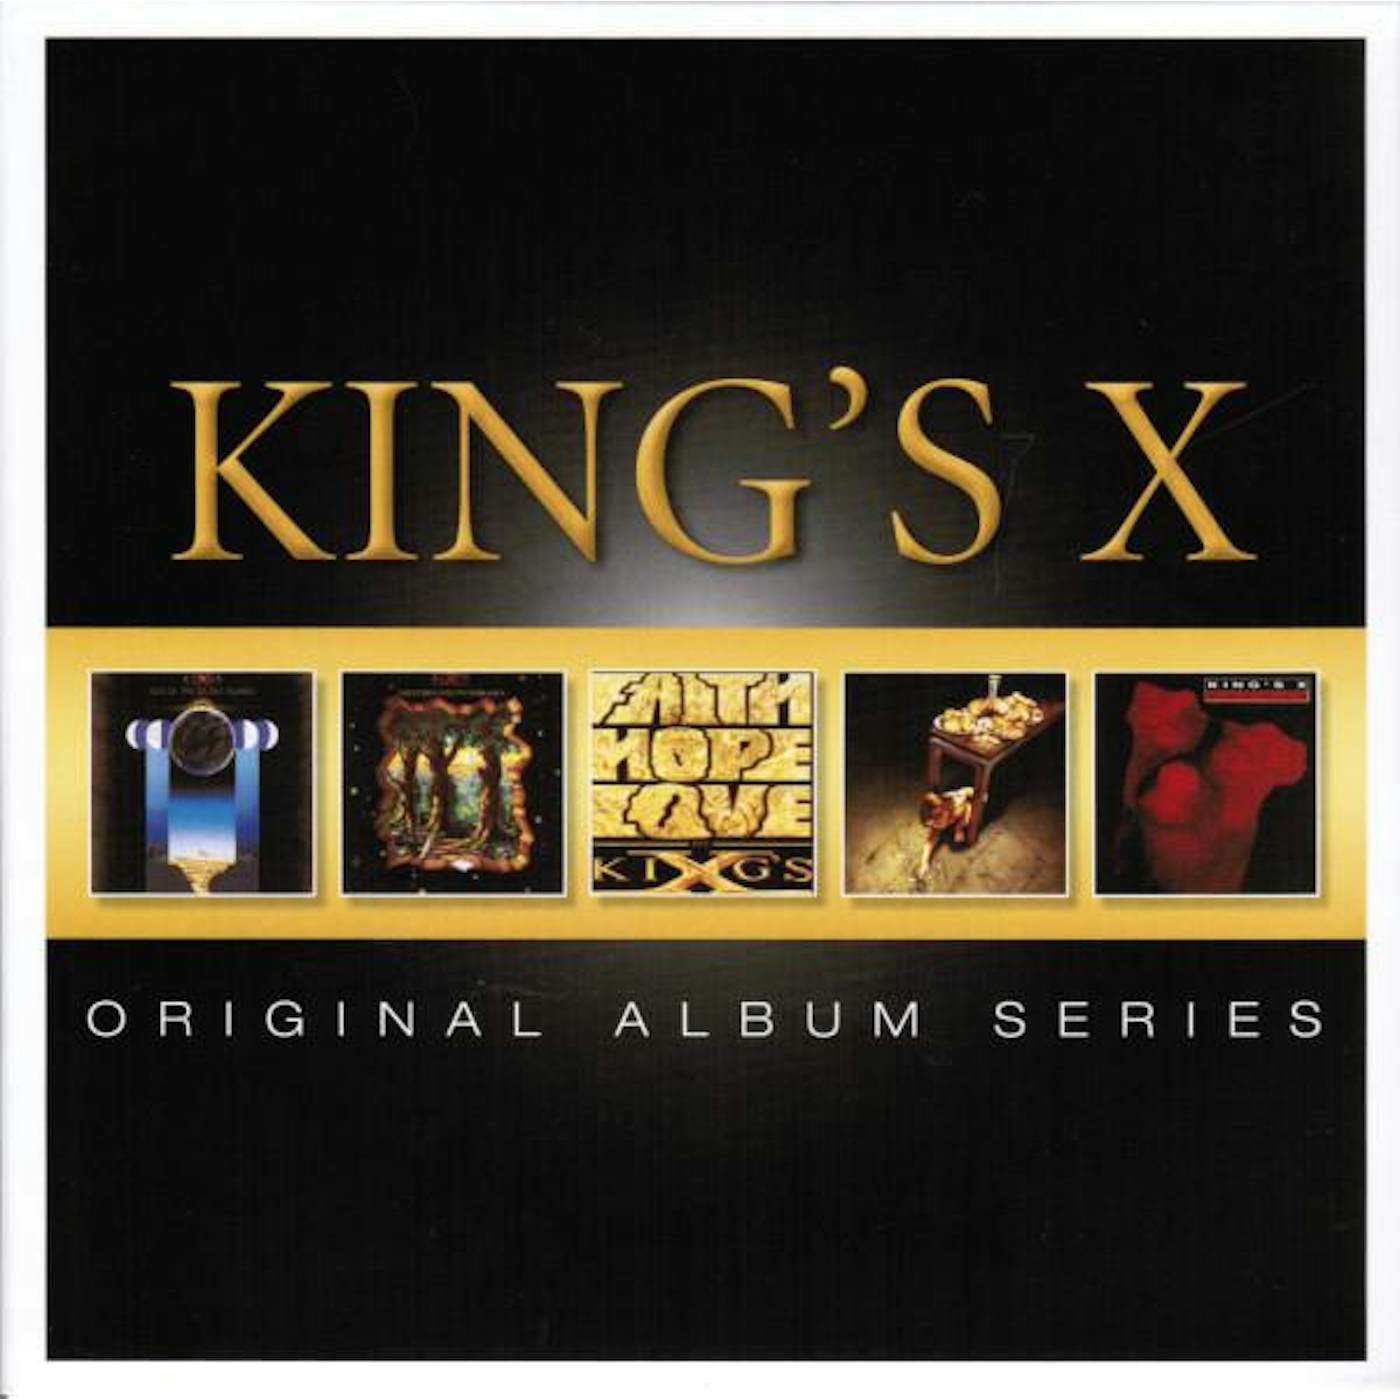 King's X ORIGINAL ALBUM SERIES CD